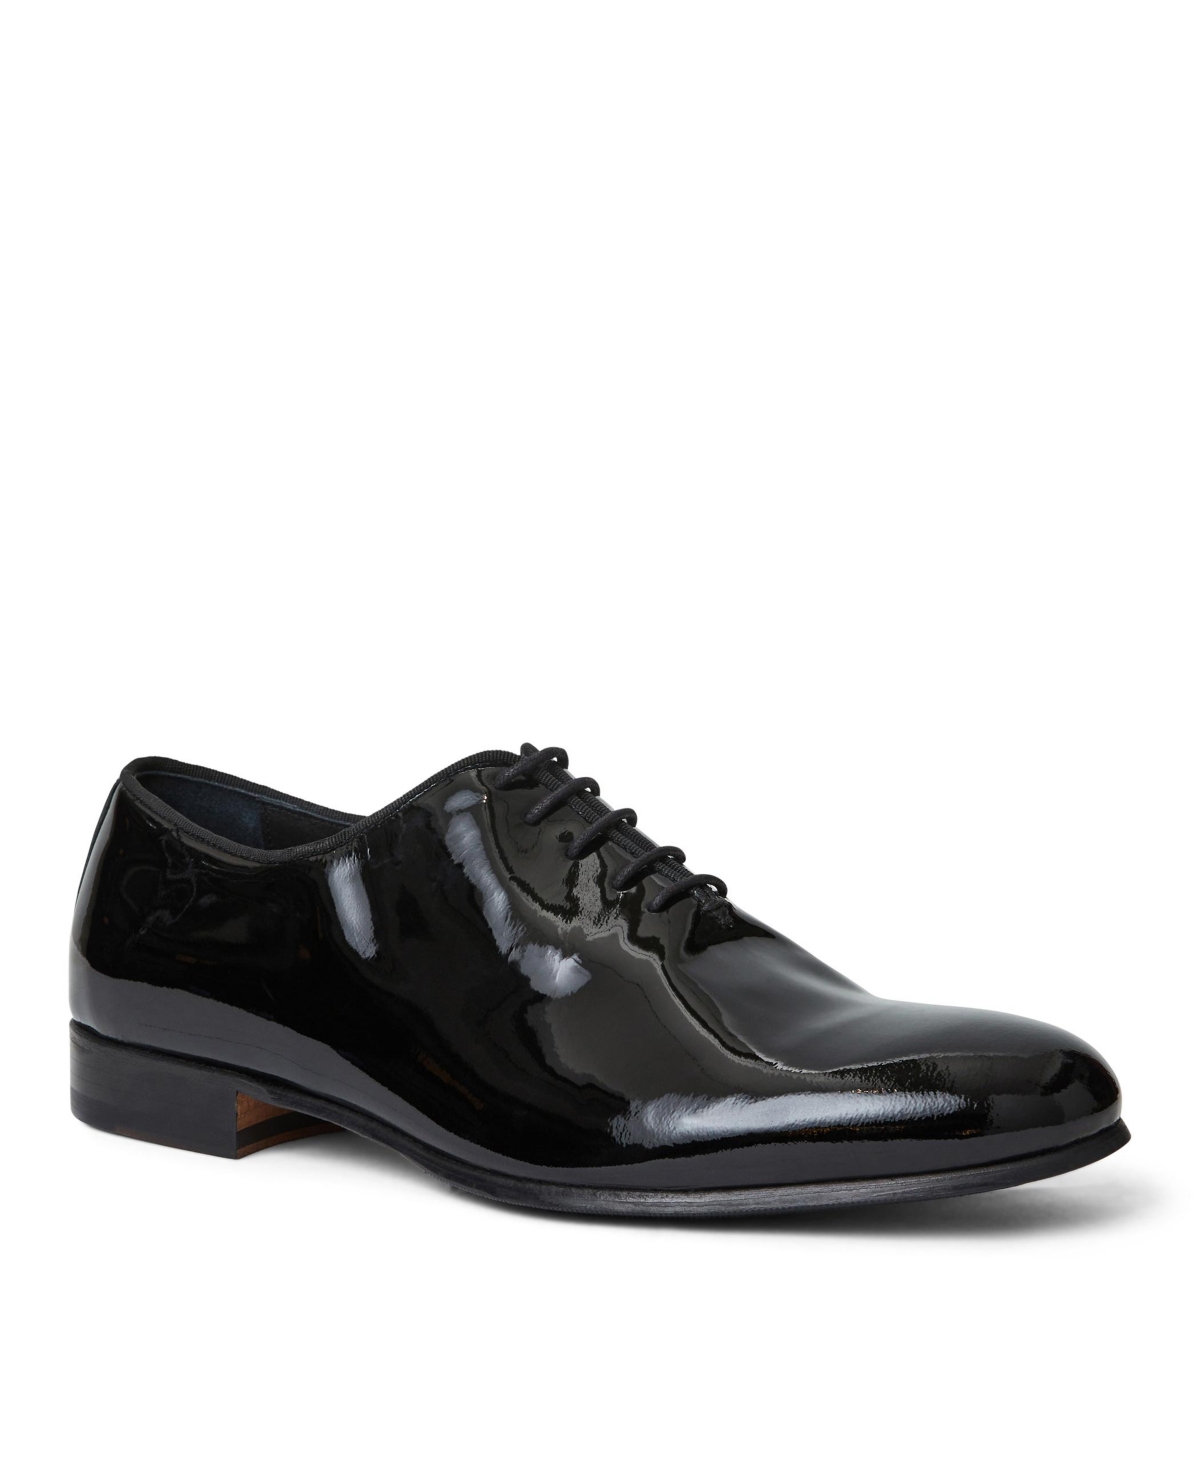 Men's Naso Patent Leather Dress Shoes - Black Patent